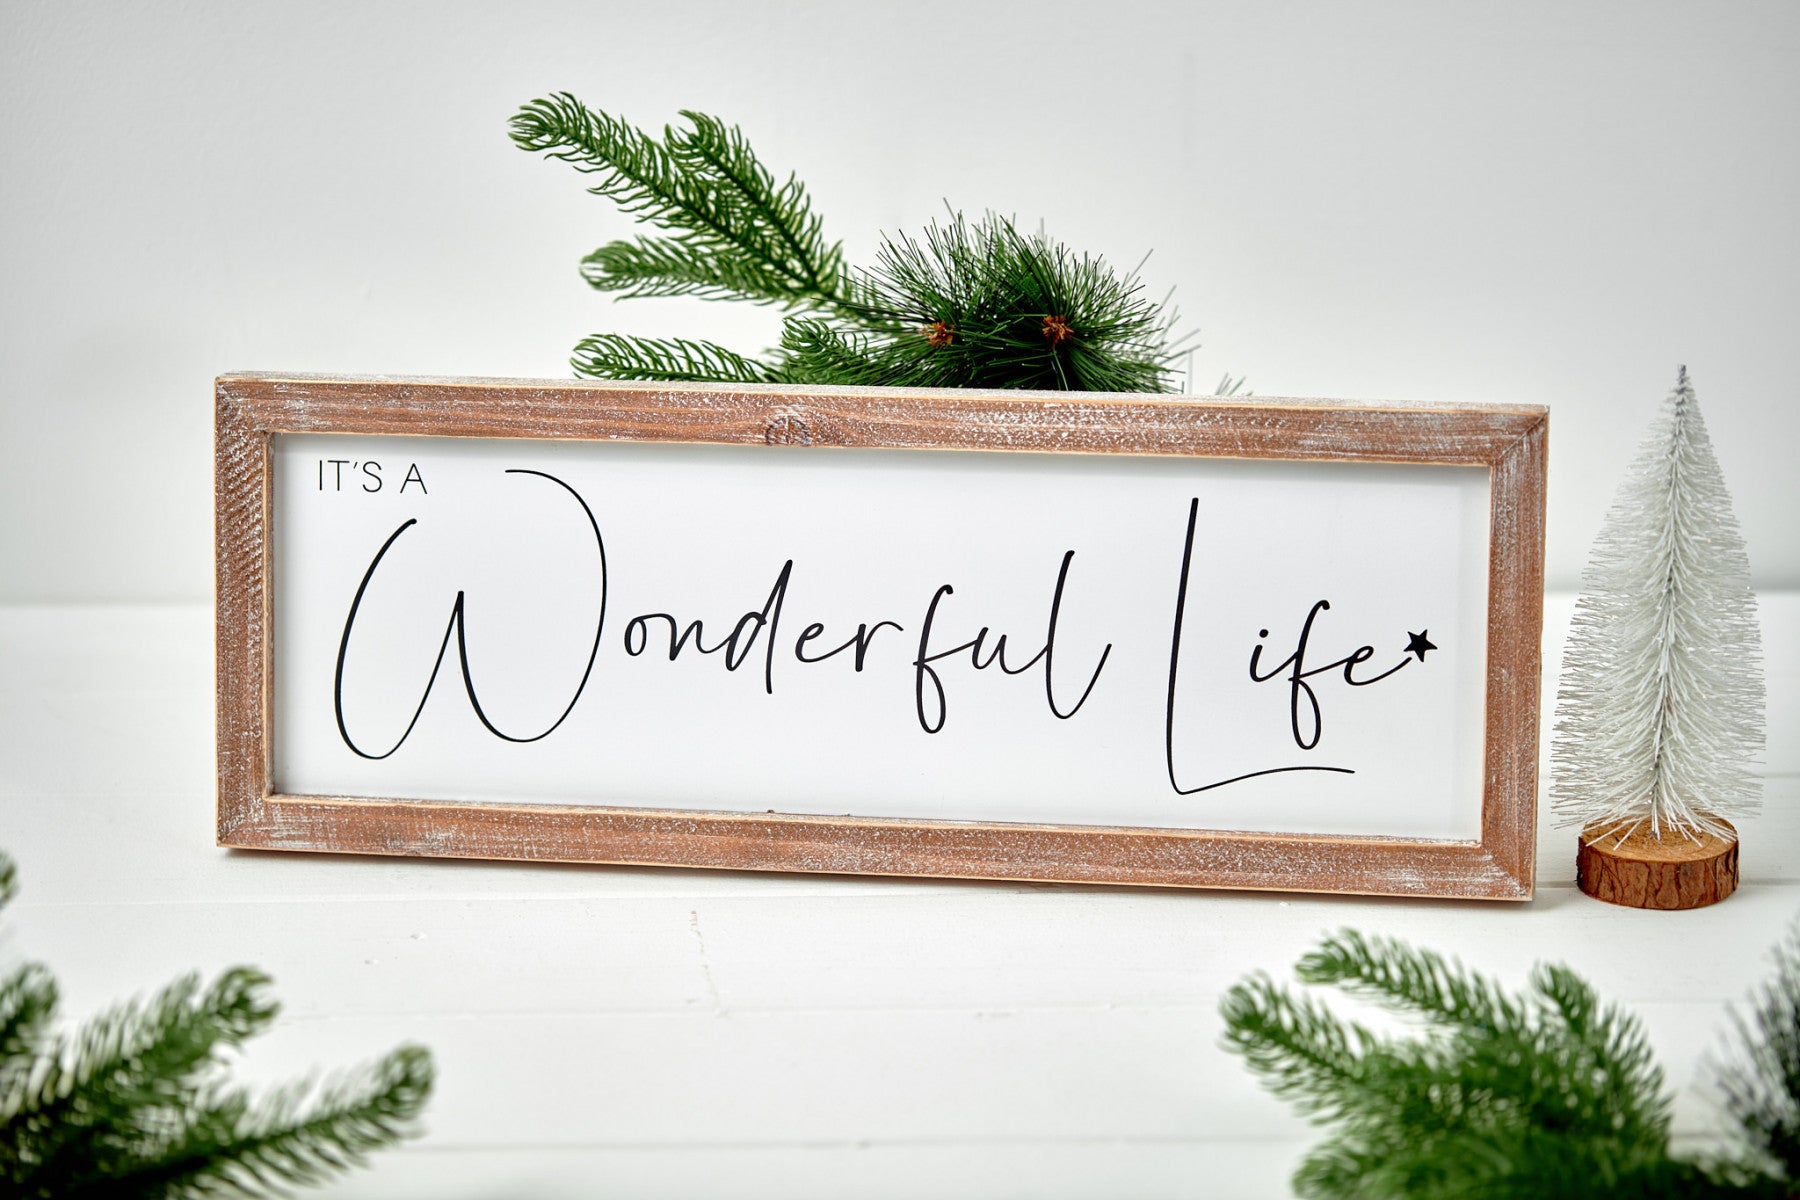 Reversible Merry Christmas - Wonderful life sign